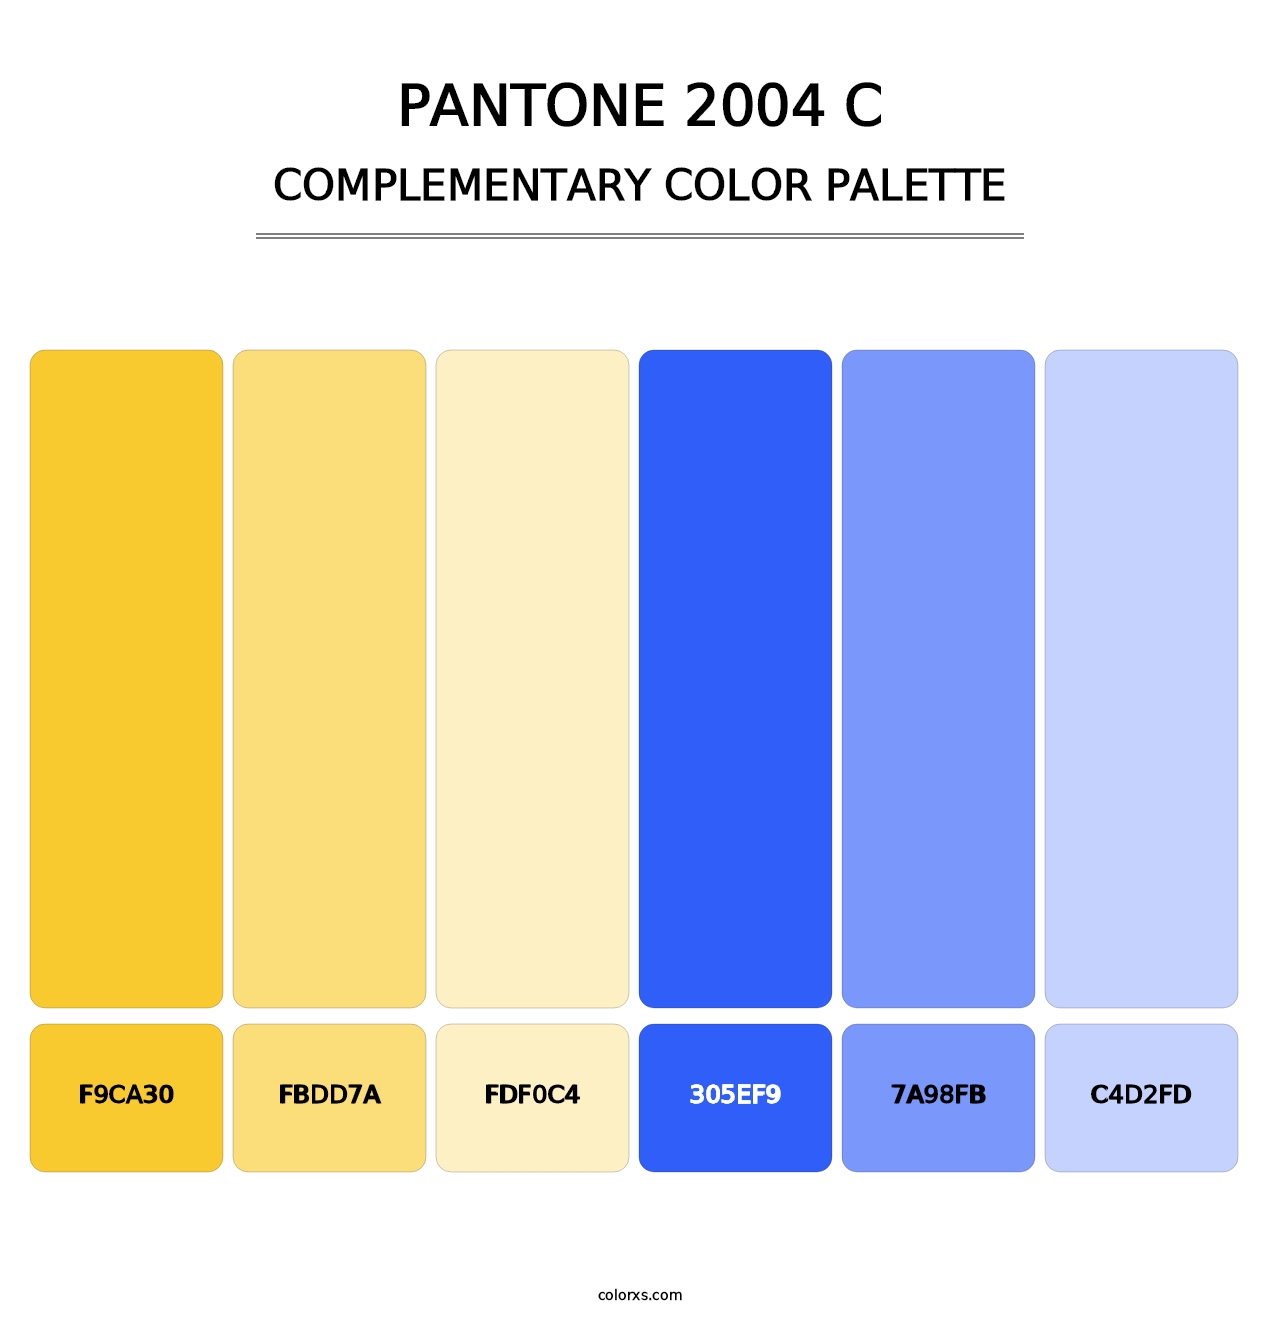 PANTONE 2004 C - Complementary Color Palette